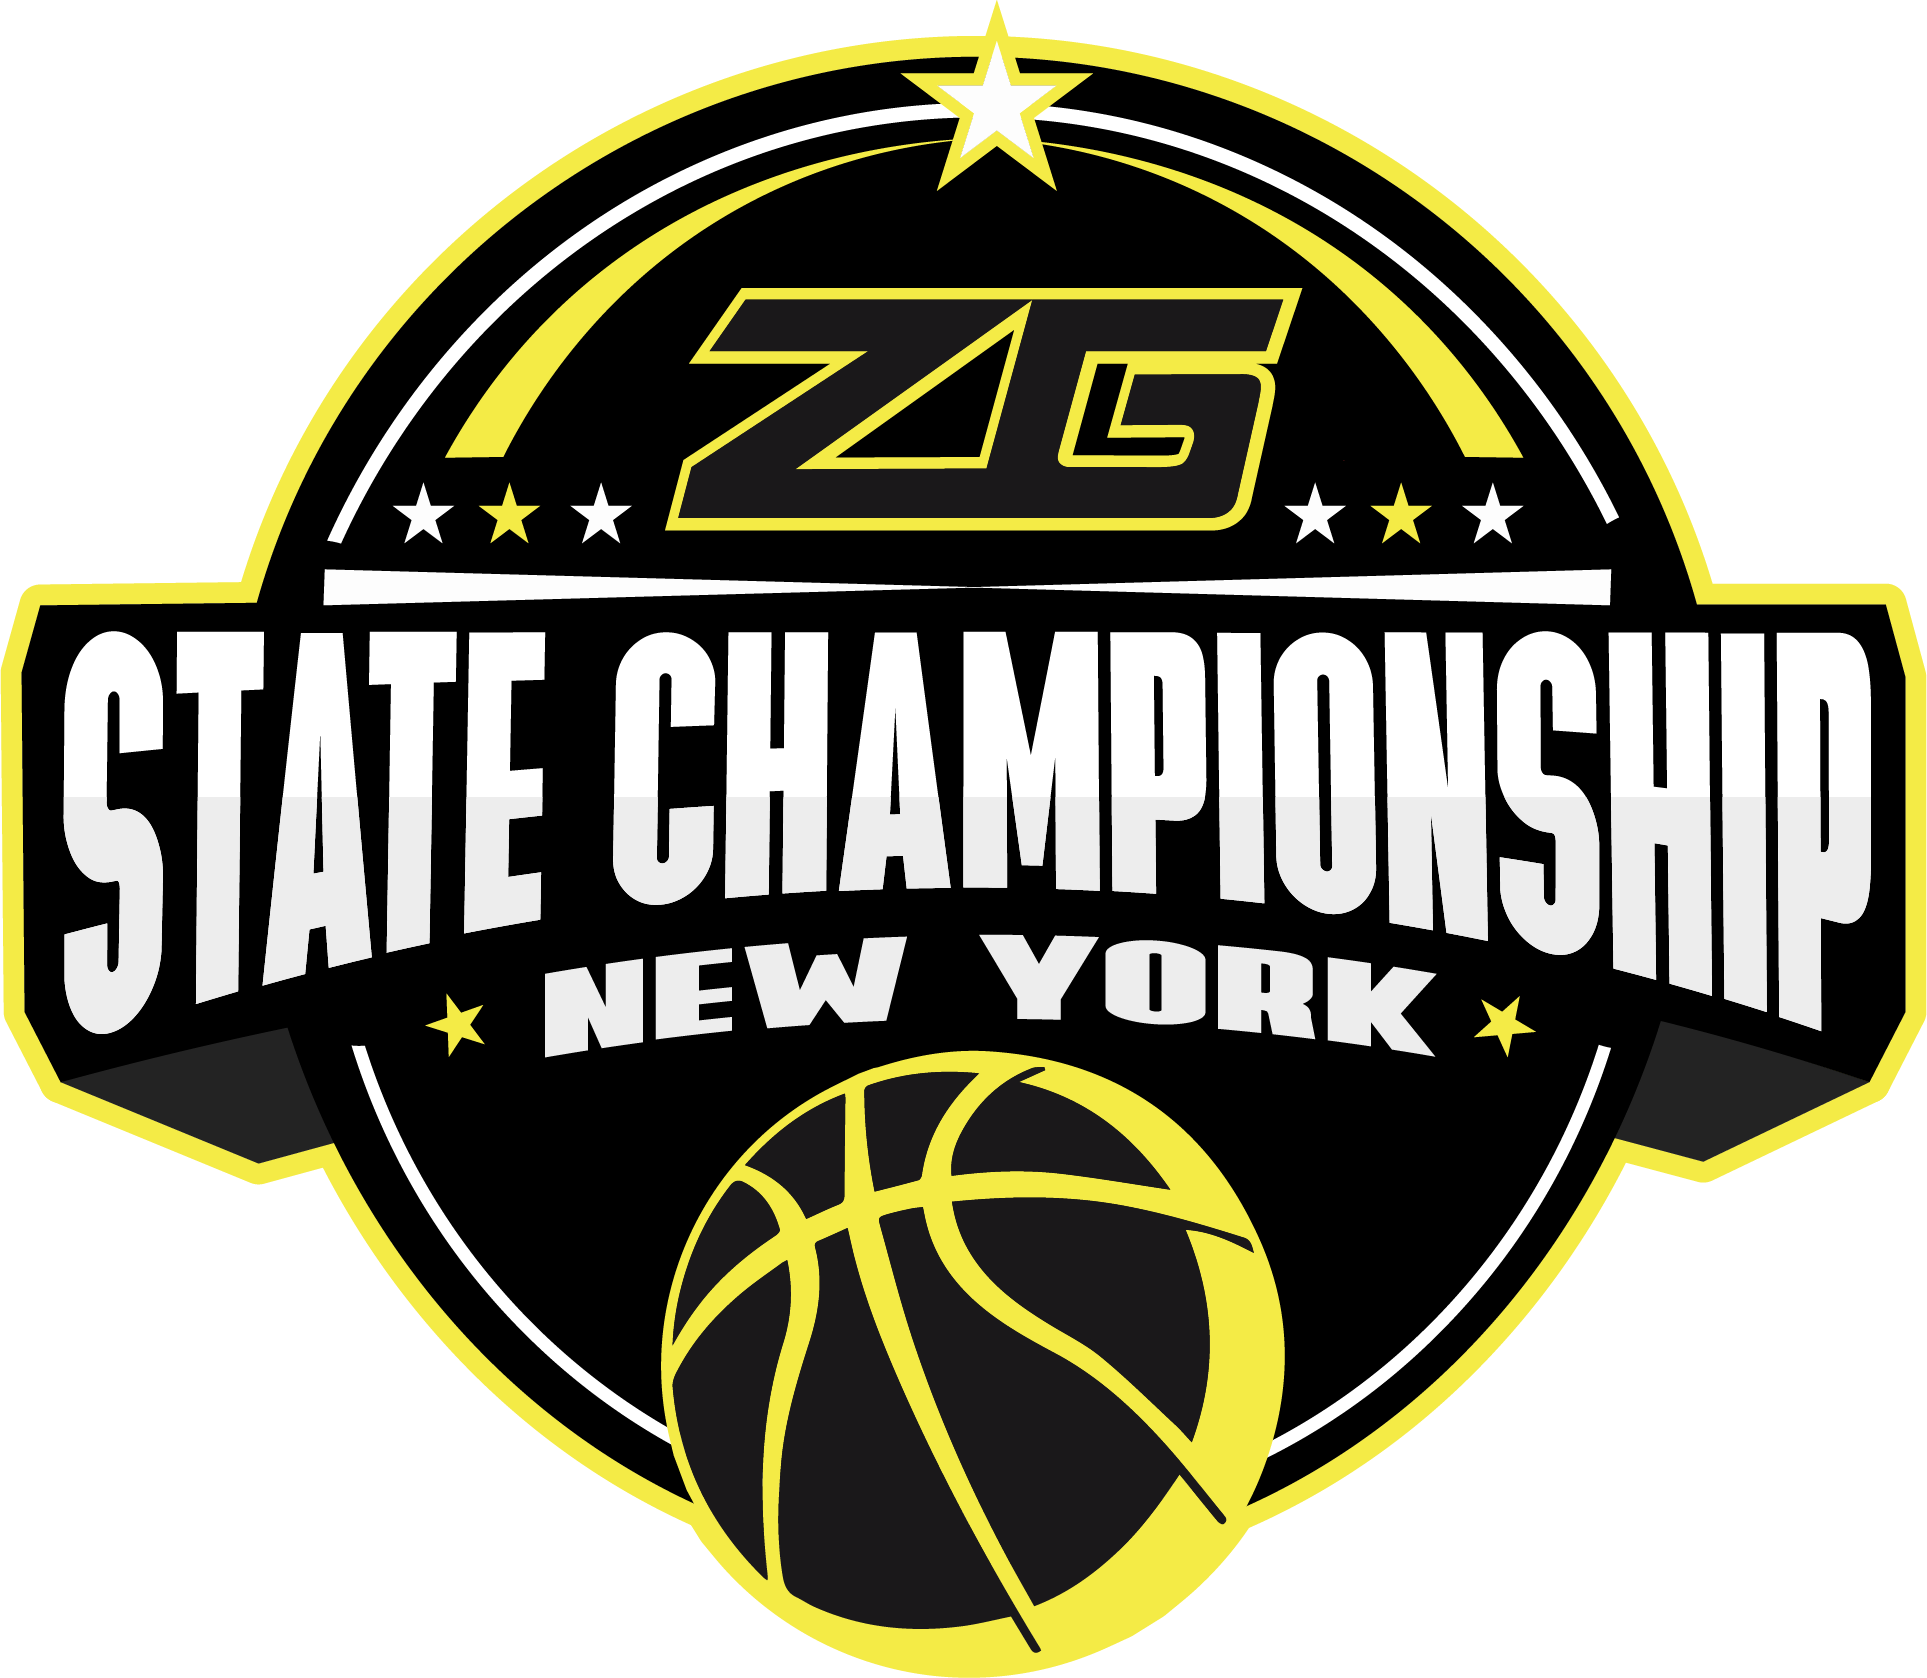 ZG State Championship New York